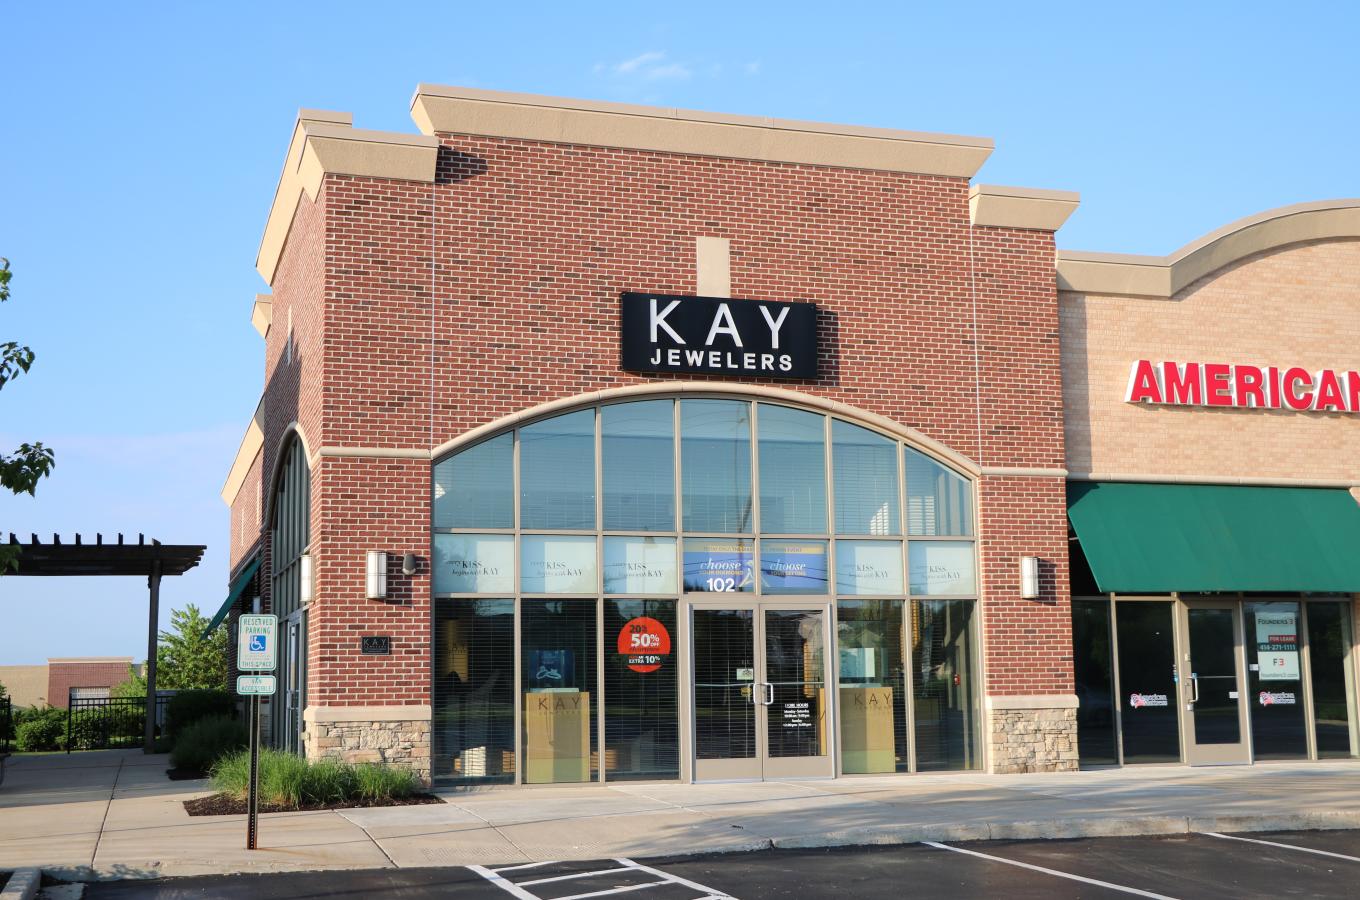 Kay jewelers storefront V Pic